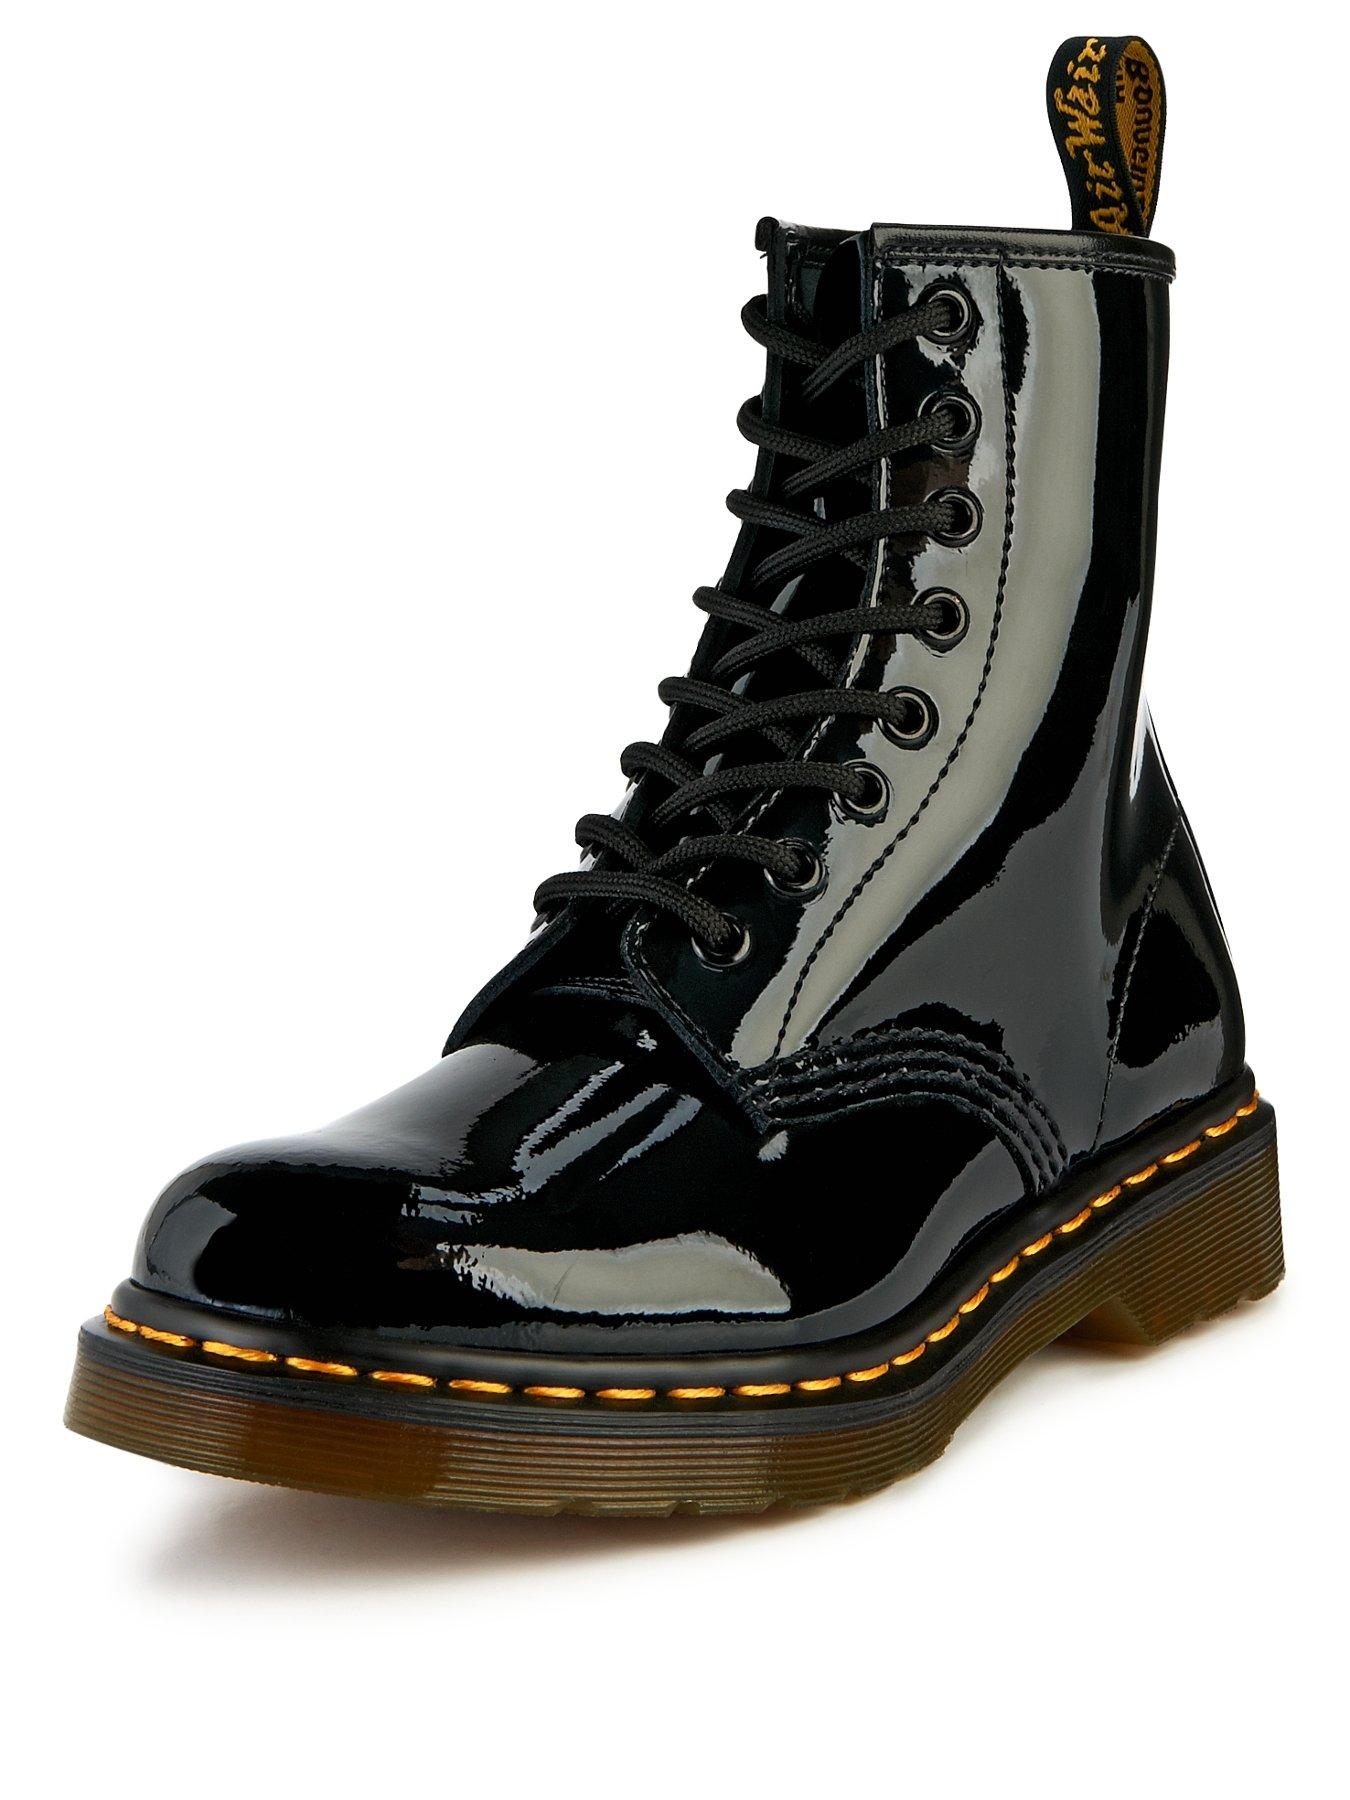 Dr Martens 8 Eyelet Leather Ankle Boots - Black Patent | littlewoods.com